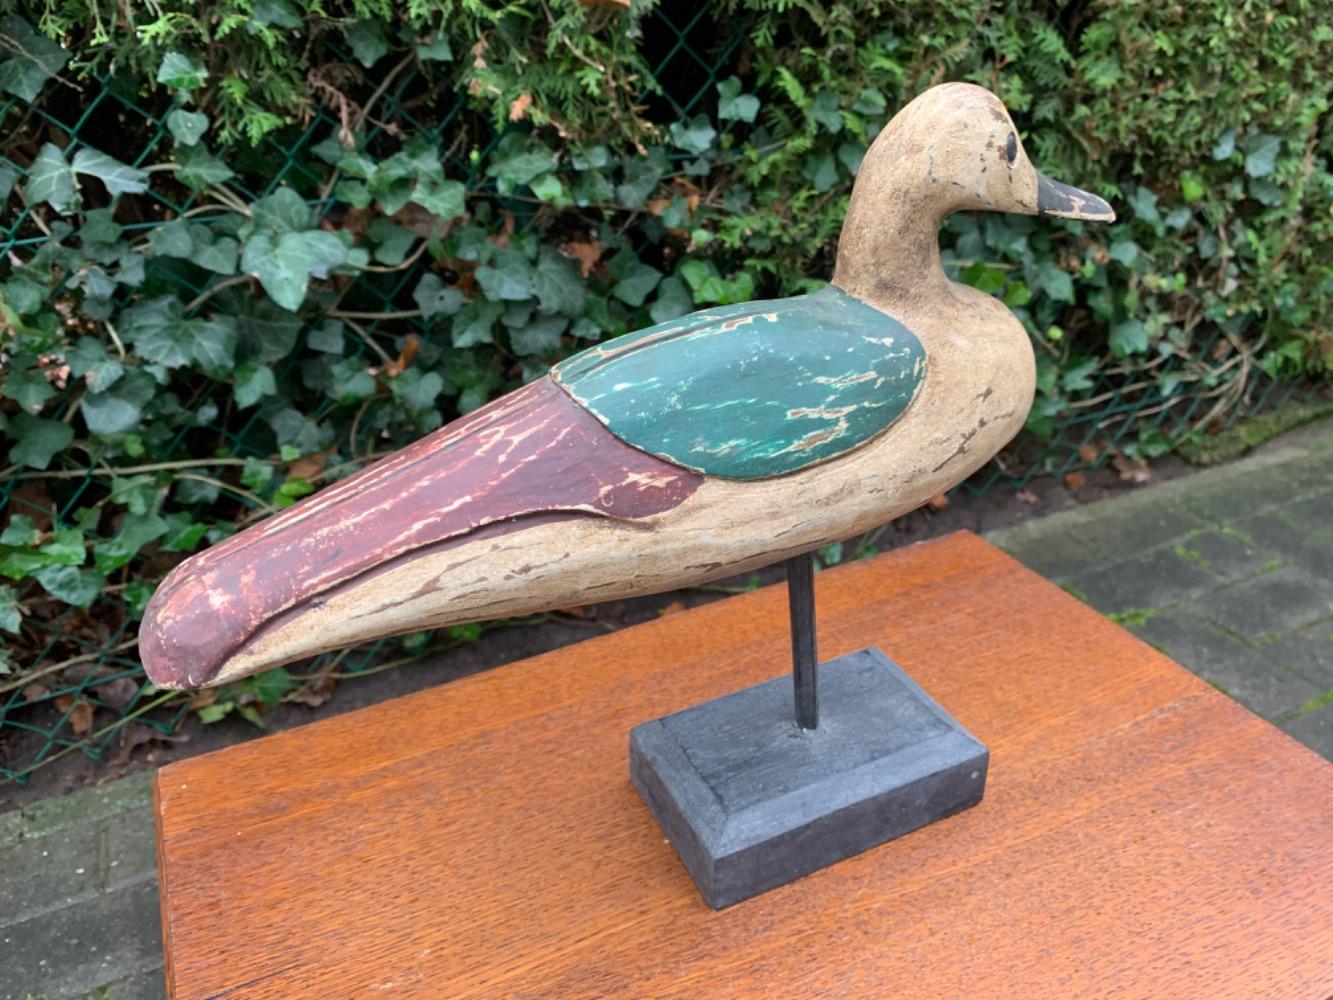 Flemish style Duck figure